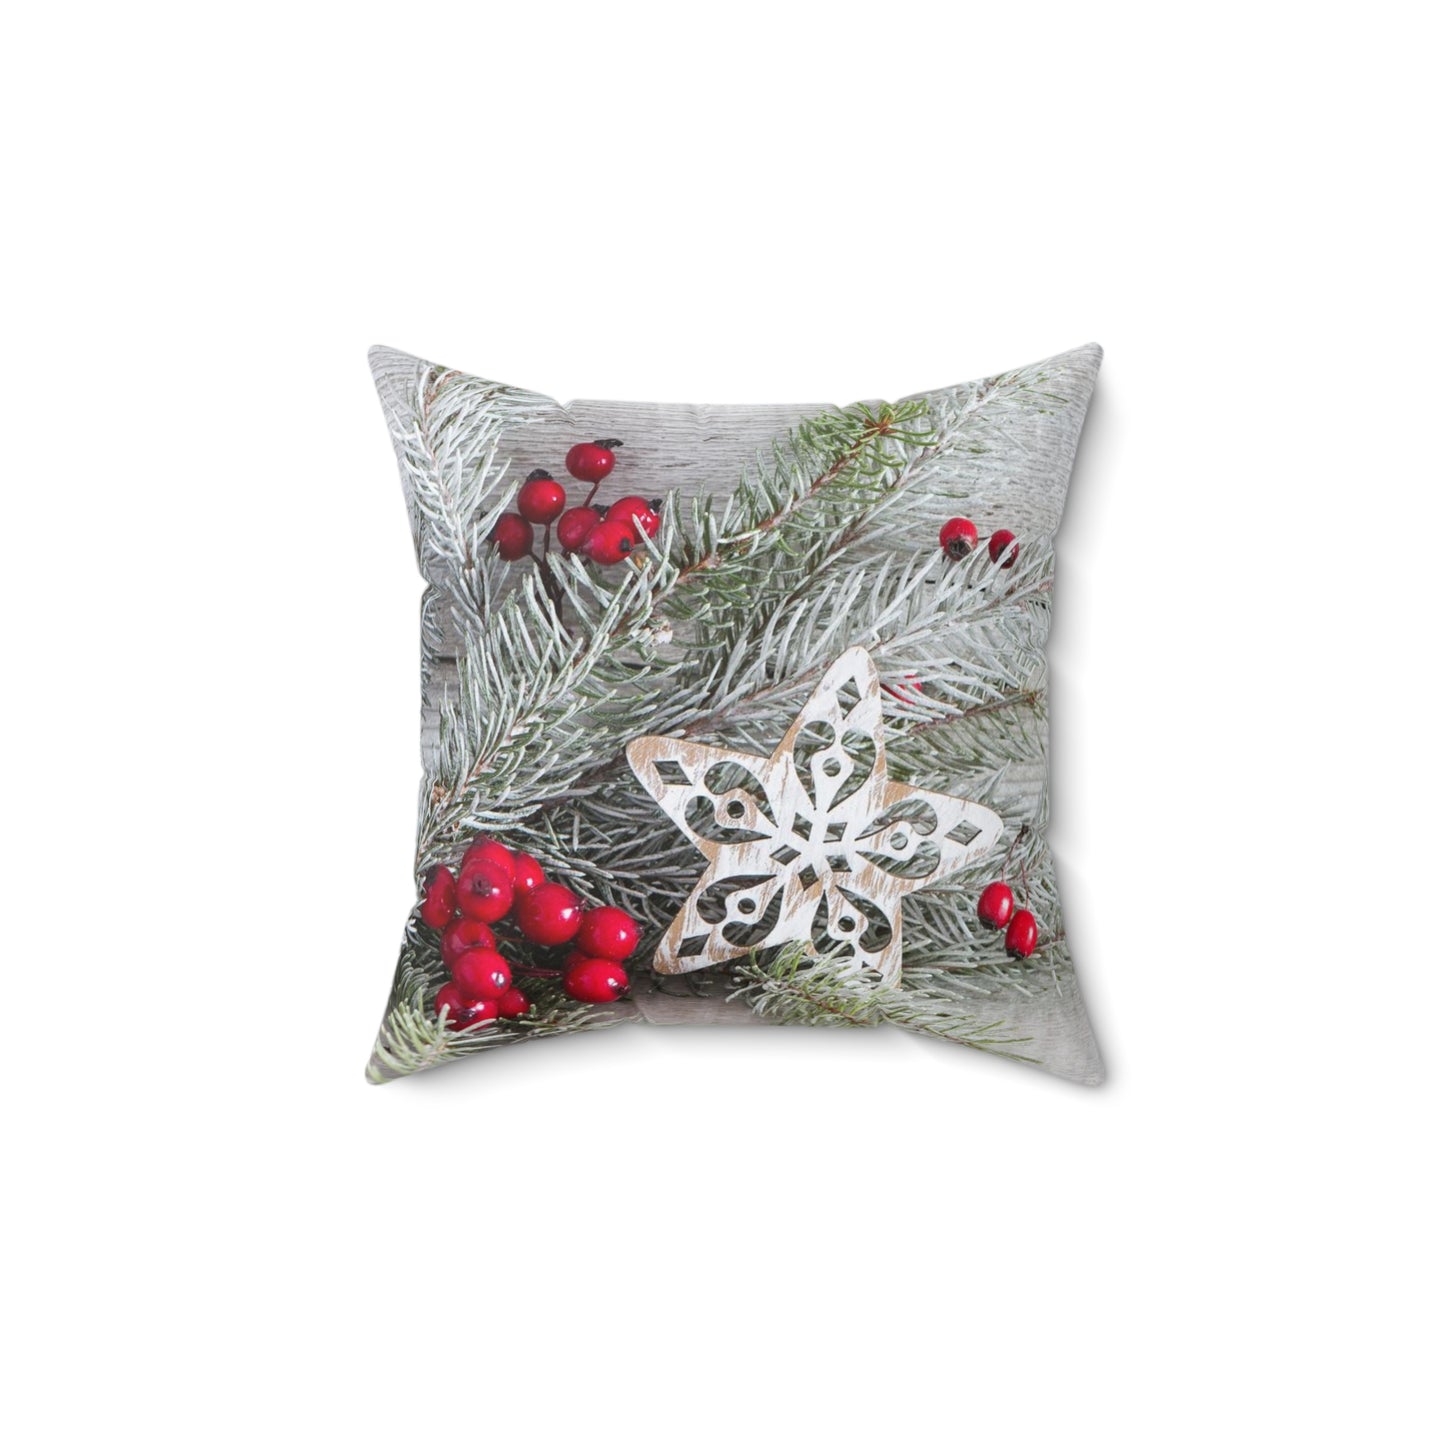 White Rustic Christmas Spun Polyester Square Pillow